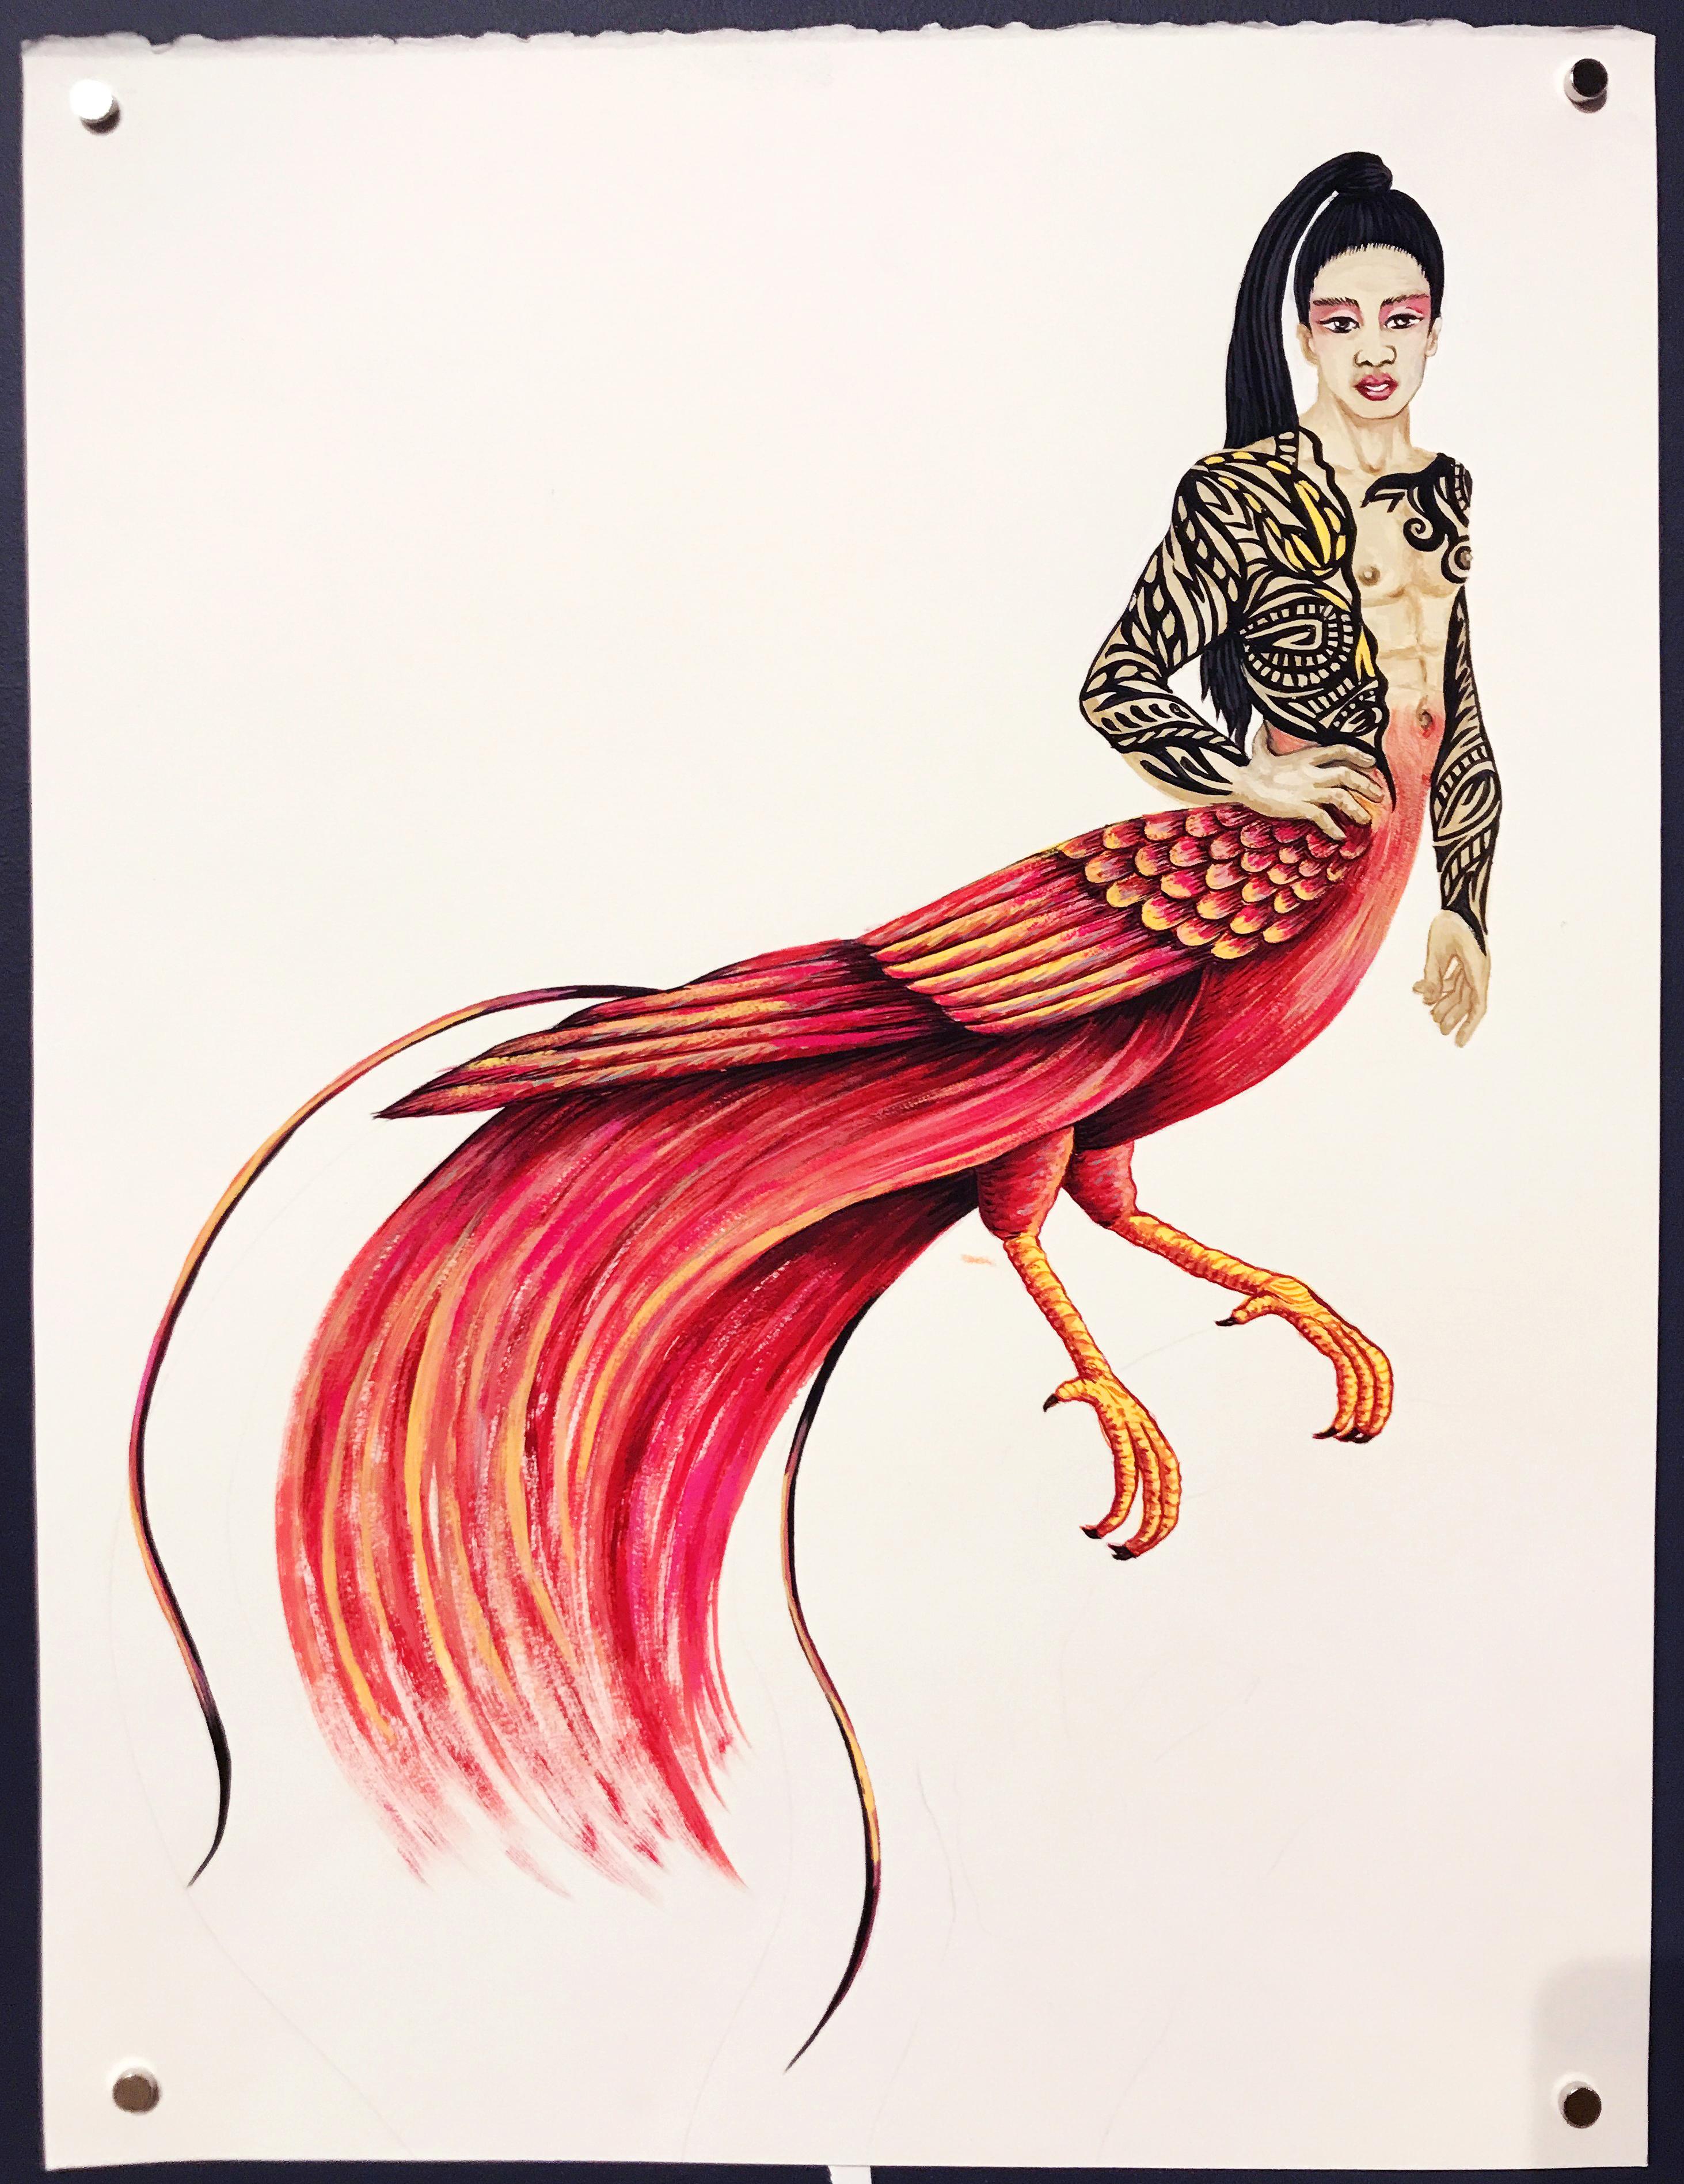 Heather Ujiie
Erotic Tree of Life- Siren 2, 2014
Watercolor on paper
14 x 11 in unframed